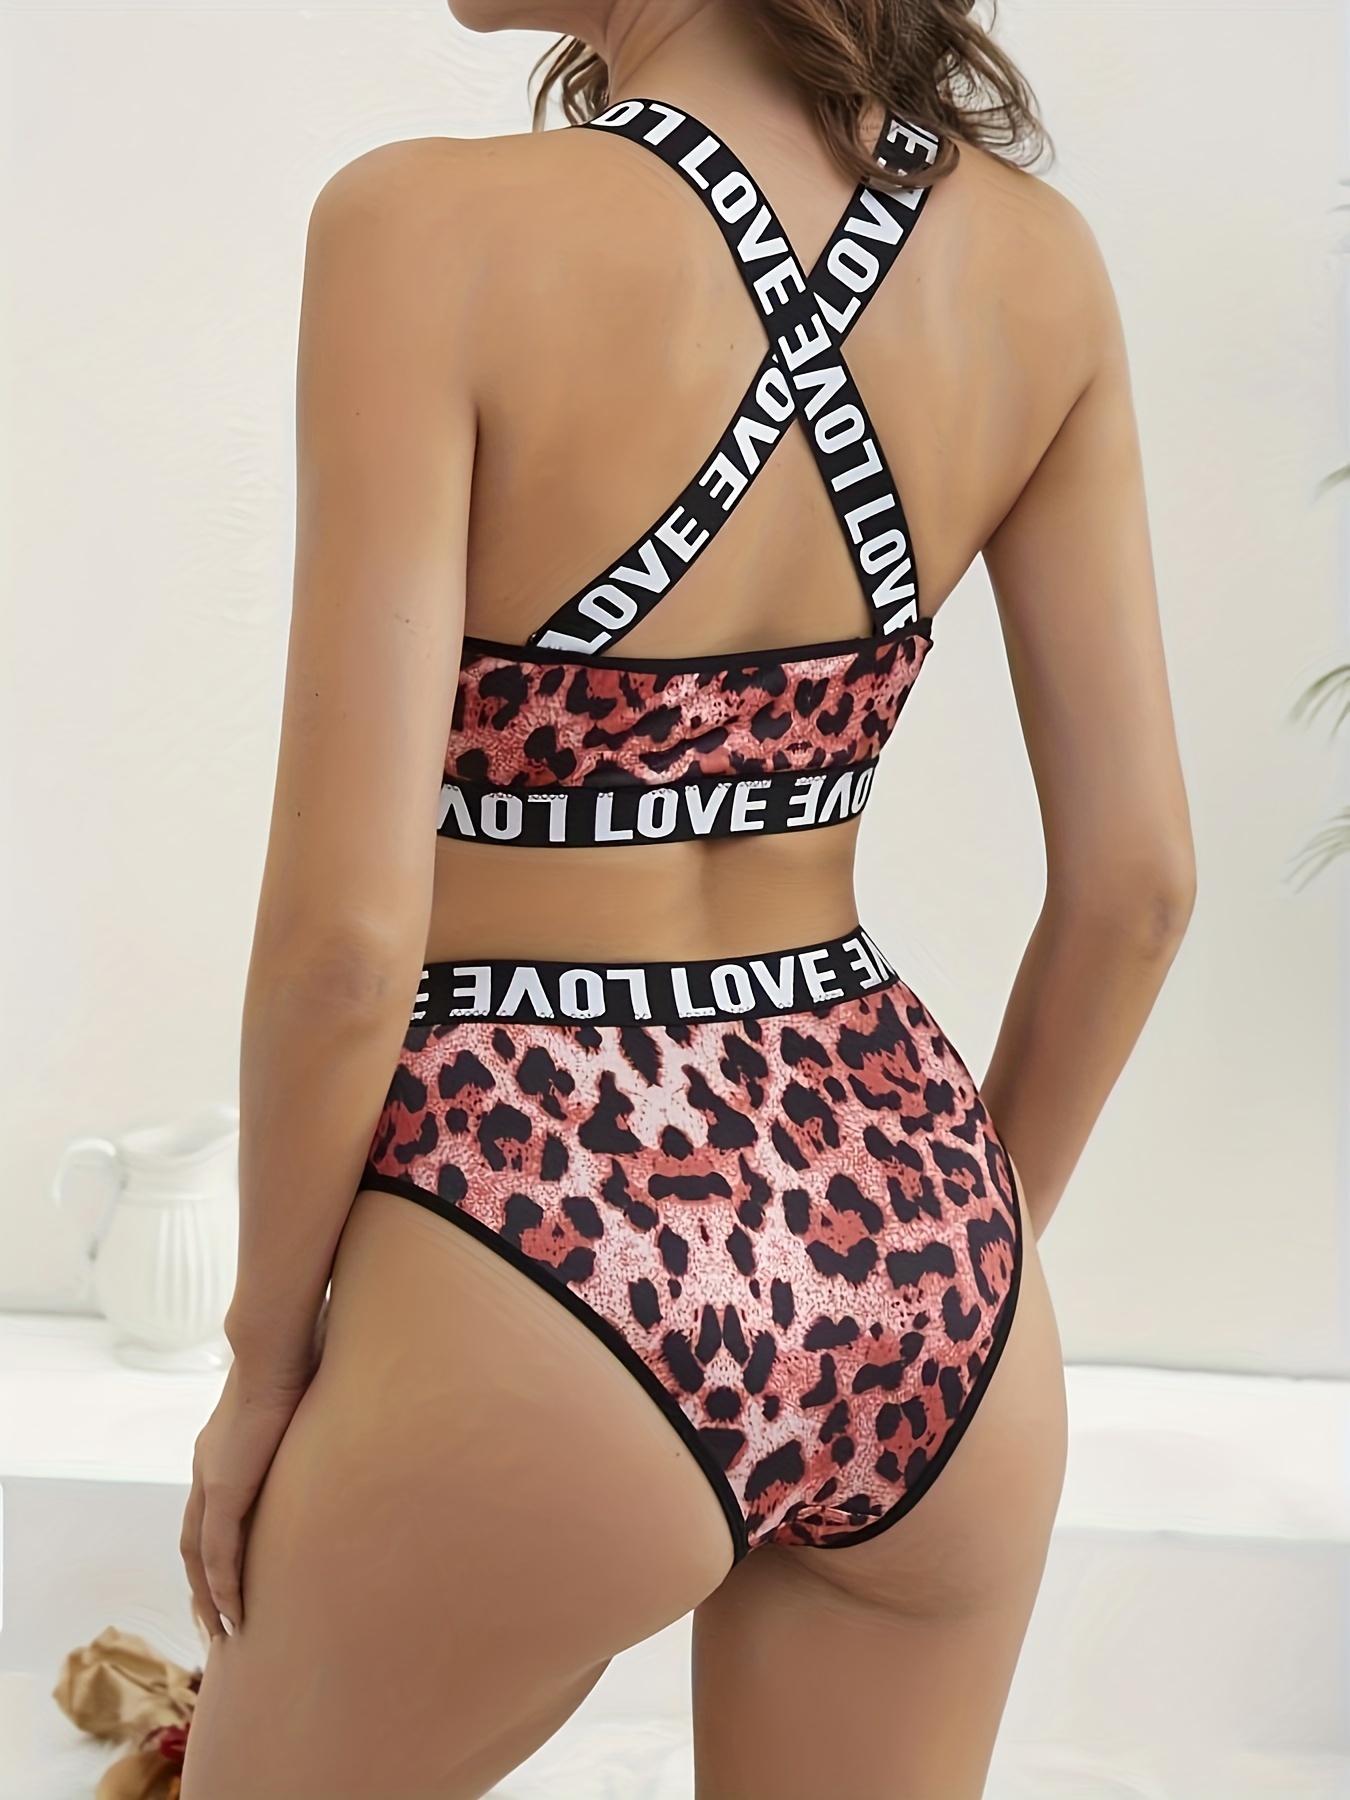 Dadaria Nursing Bras Women Fashion Leopard Print Beautiful Back